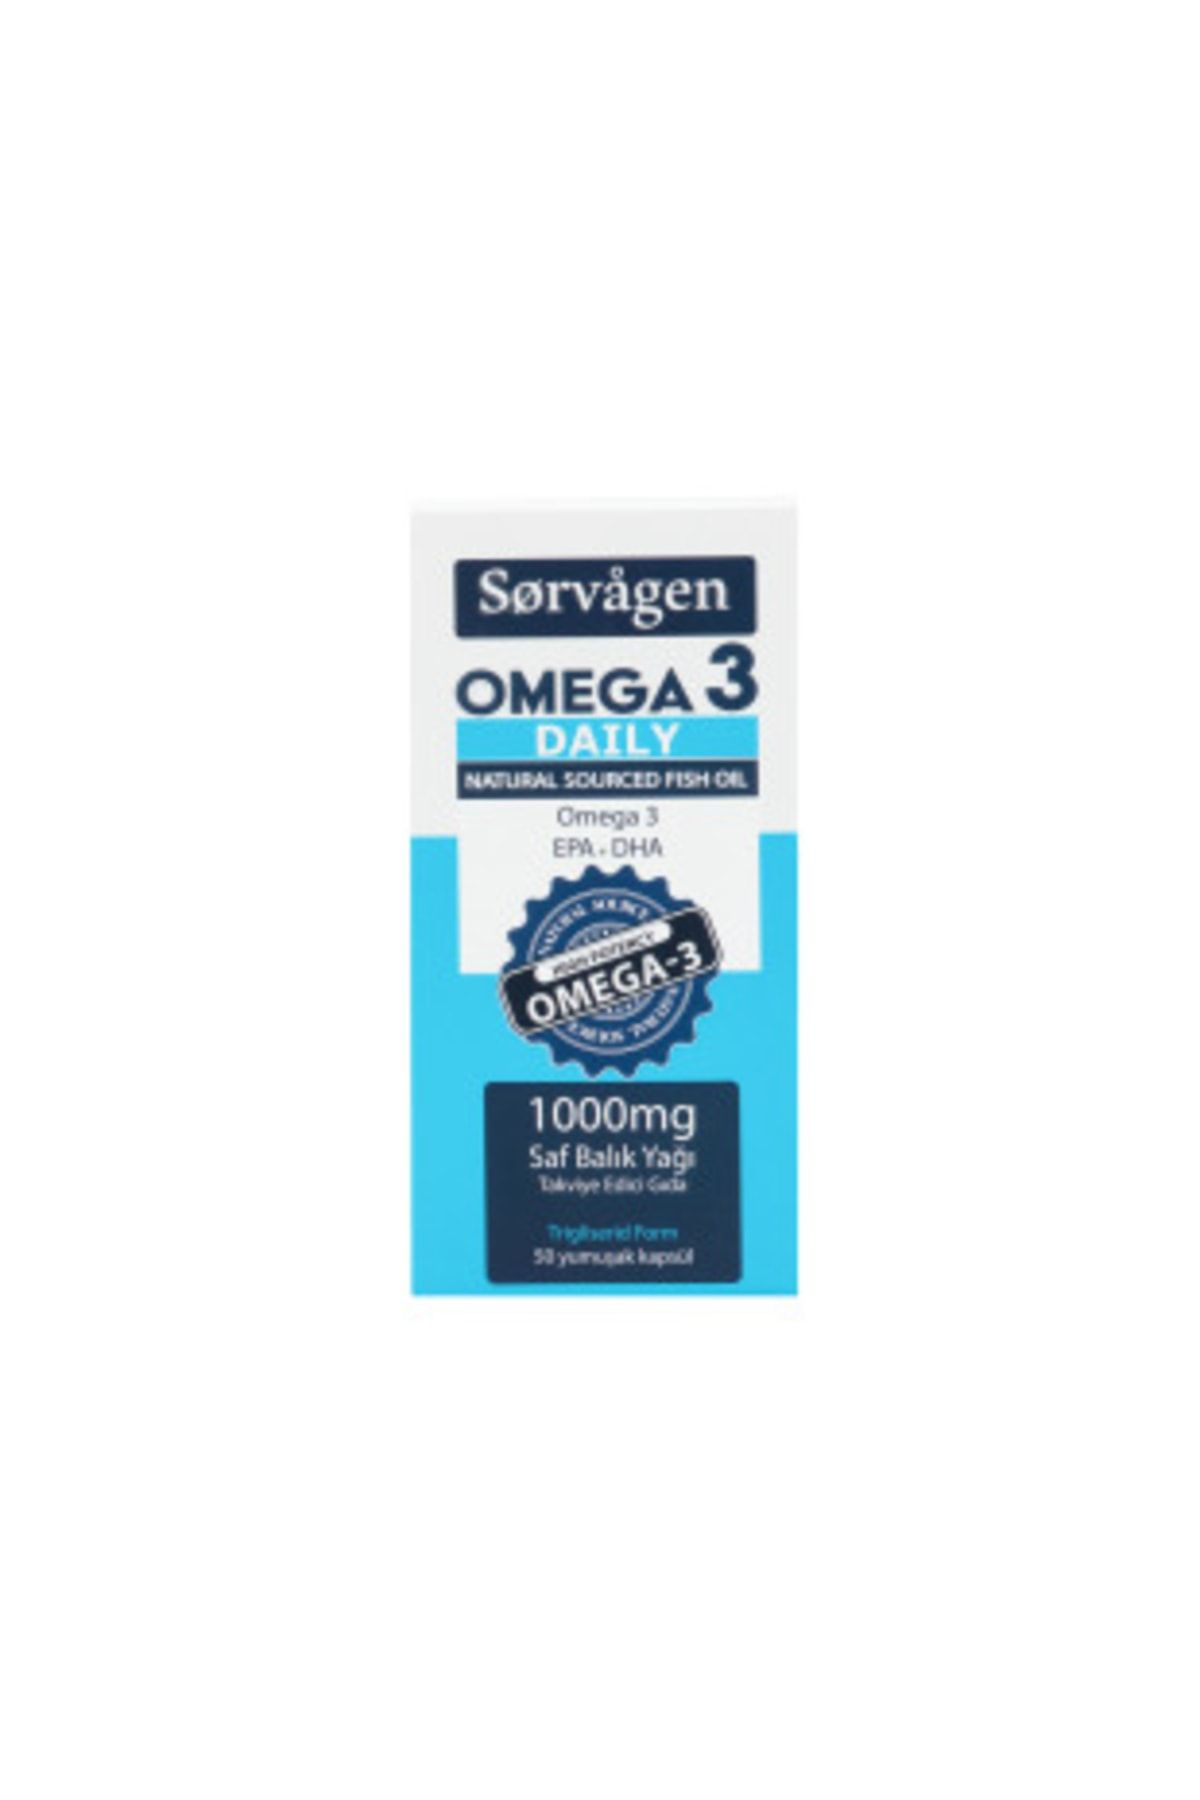 Sorvagen Omega 3 Daily Saf Balık Yağı, 50 Kapsül, 1000 Mg